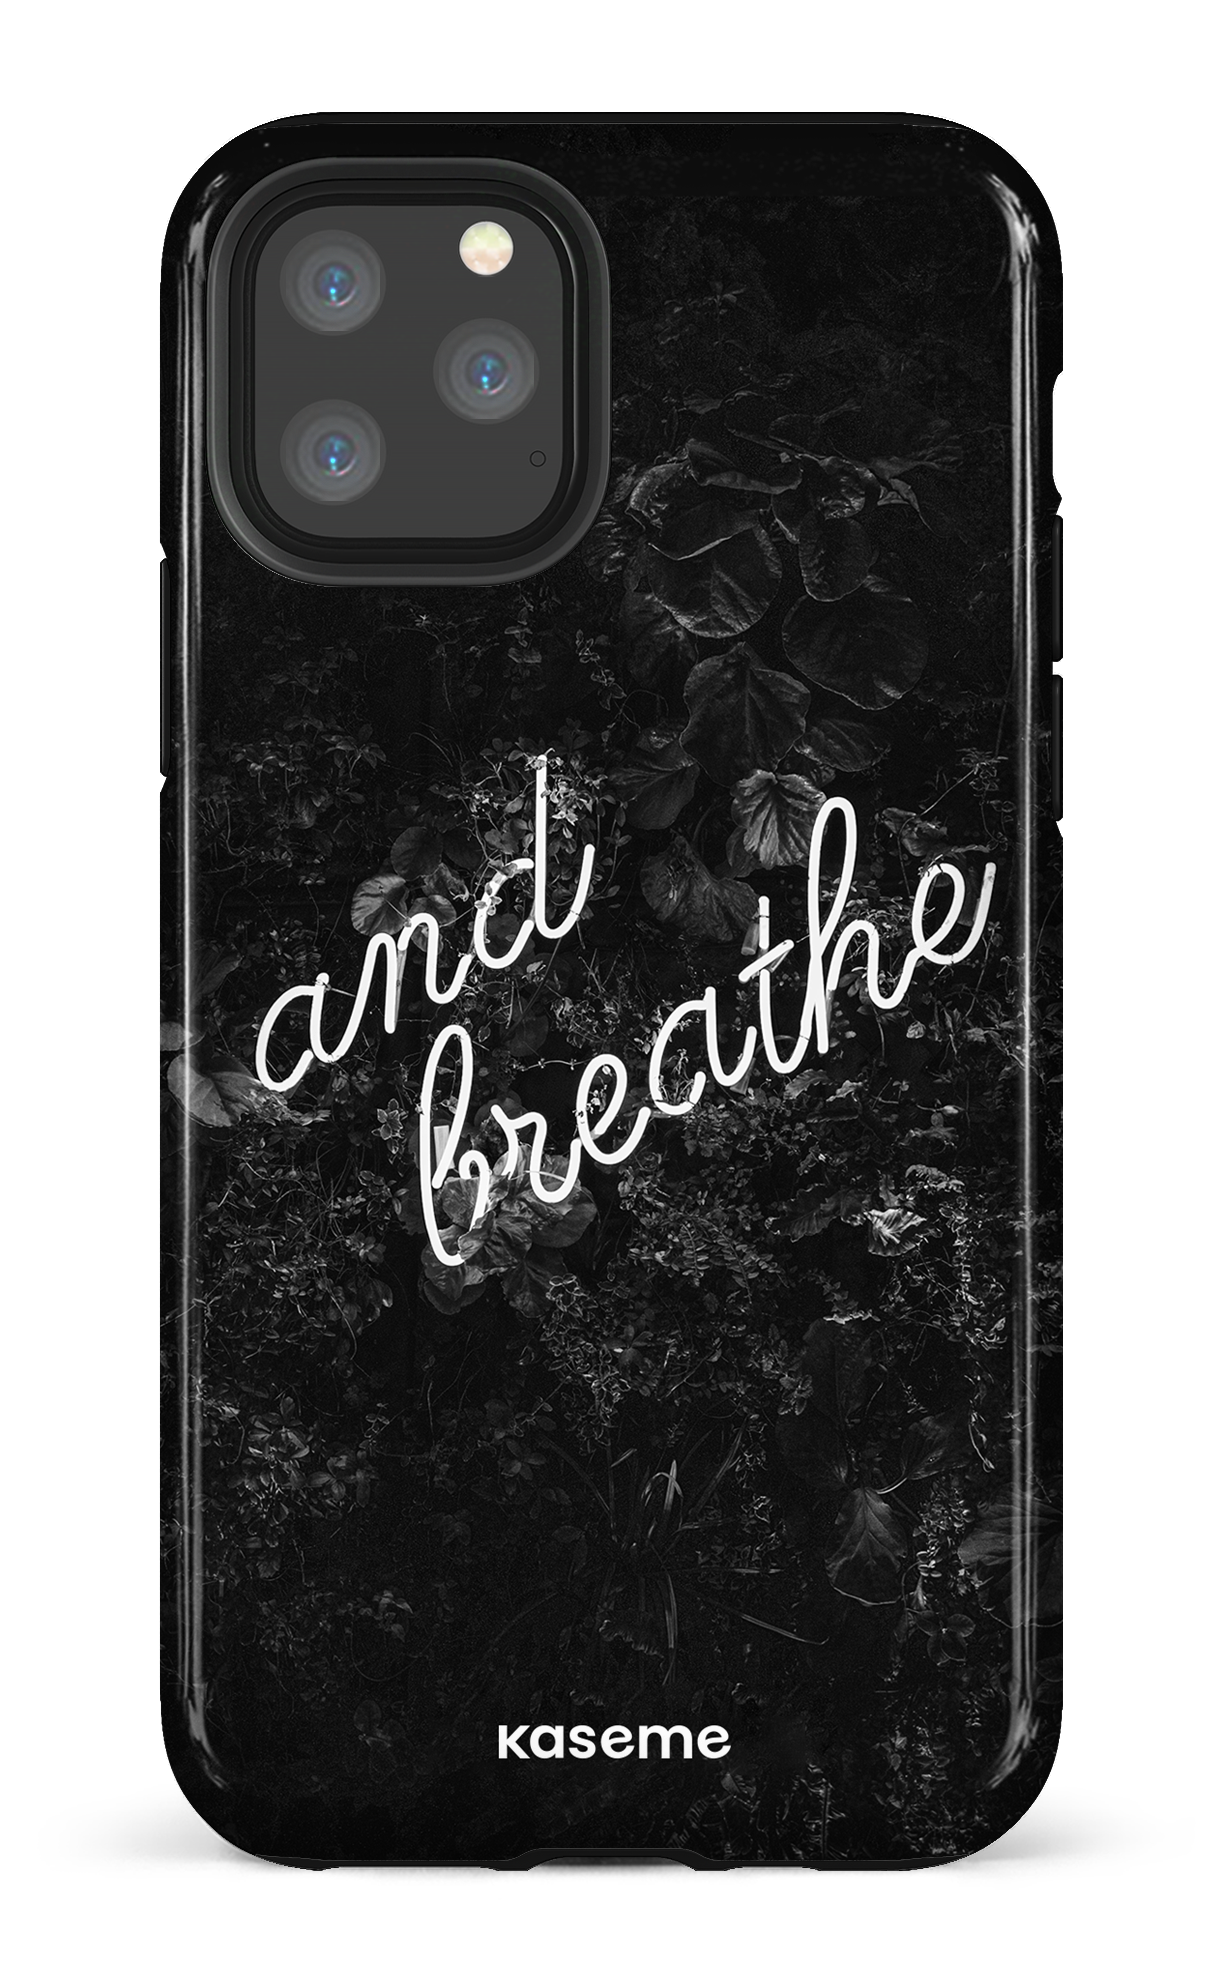 Exhale - iPhone 11 Pro